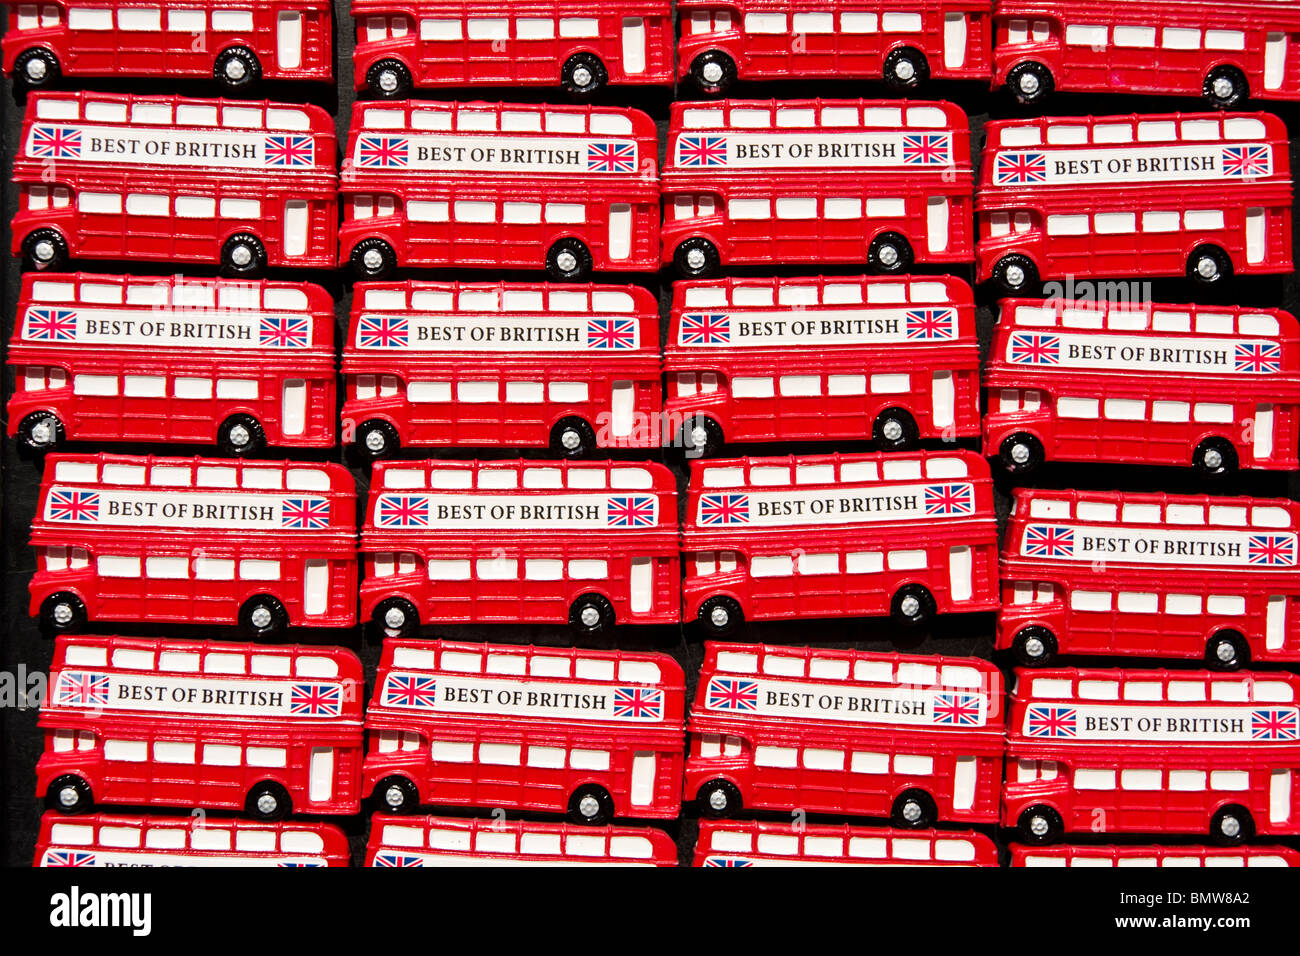 London bus frigo magnete souvenir, Inghilterra, Regno Unito Foto Stock